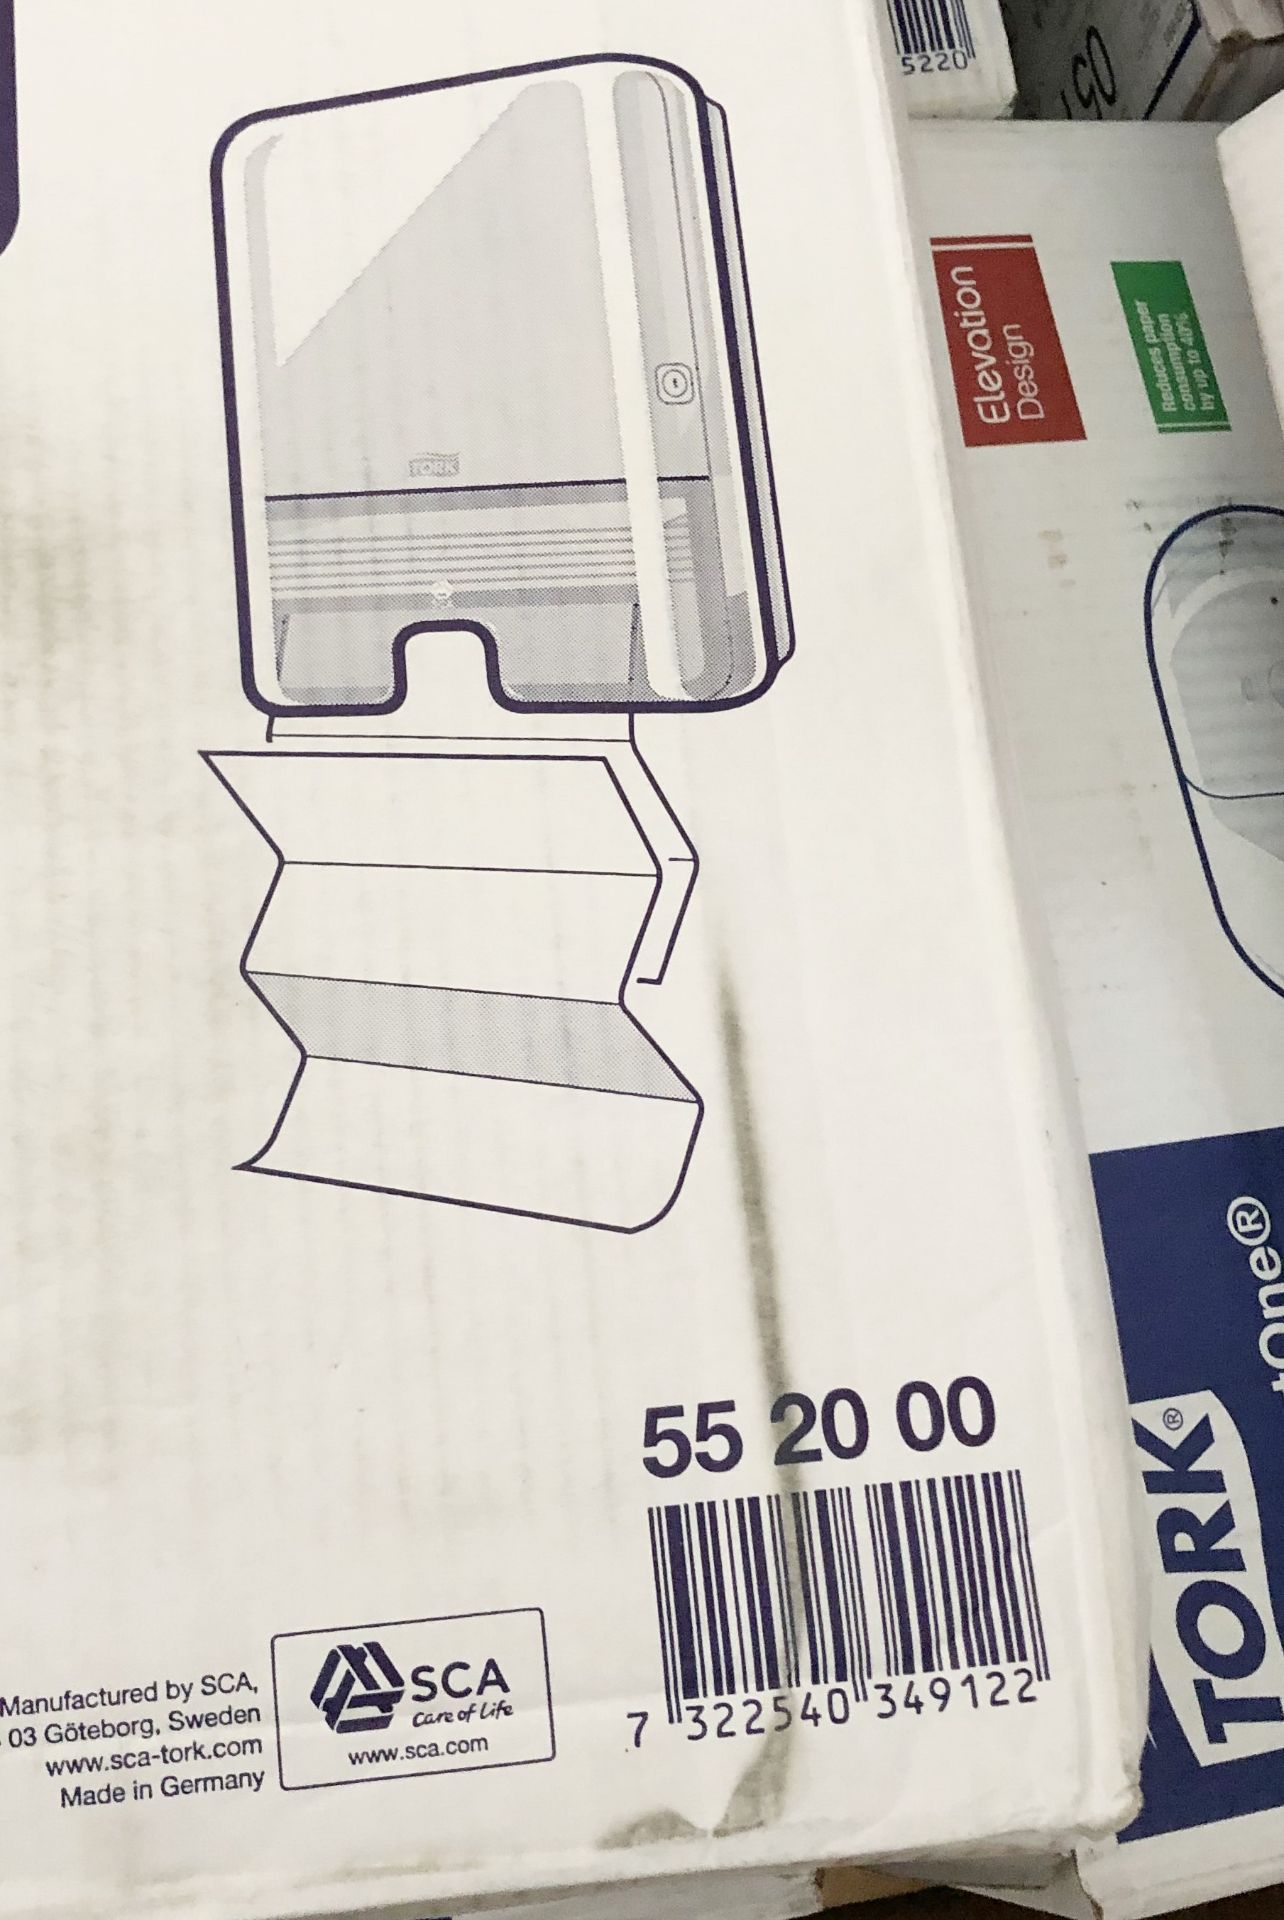 4 x TORK Multifold Hand Towel Dispenser - Ref: 55 20 00 - CL329 - Total RRP £213.32 - Image 2 of 3